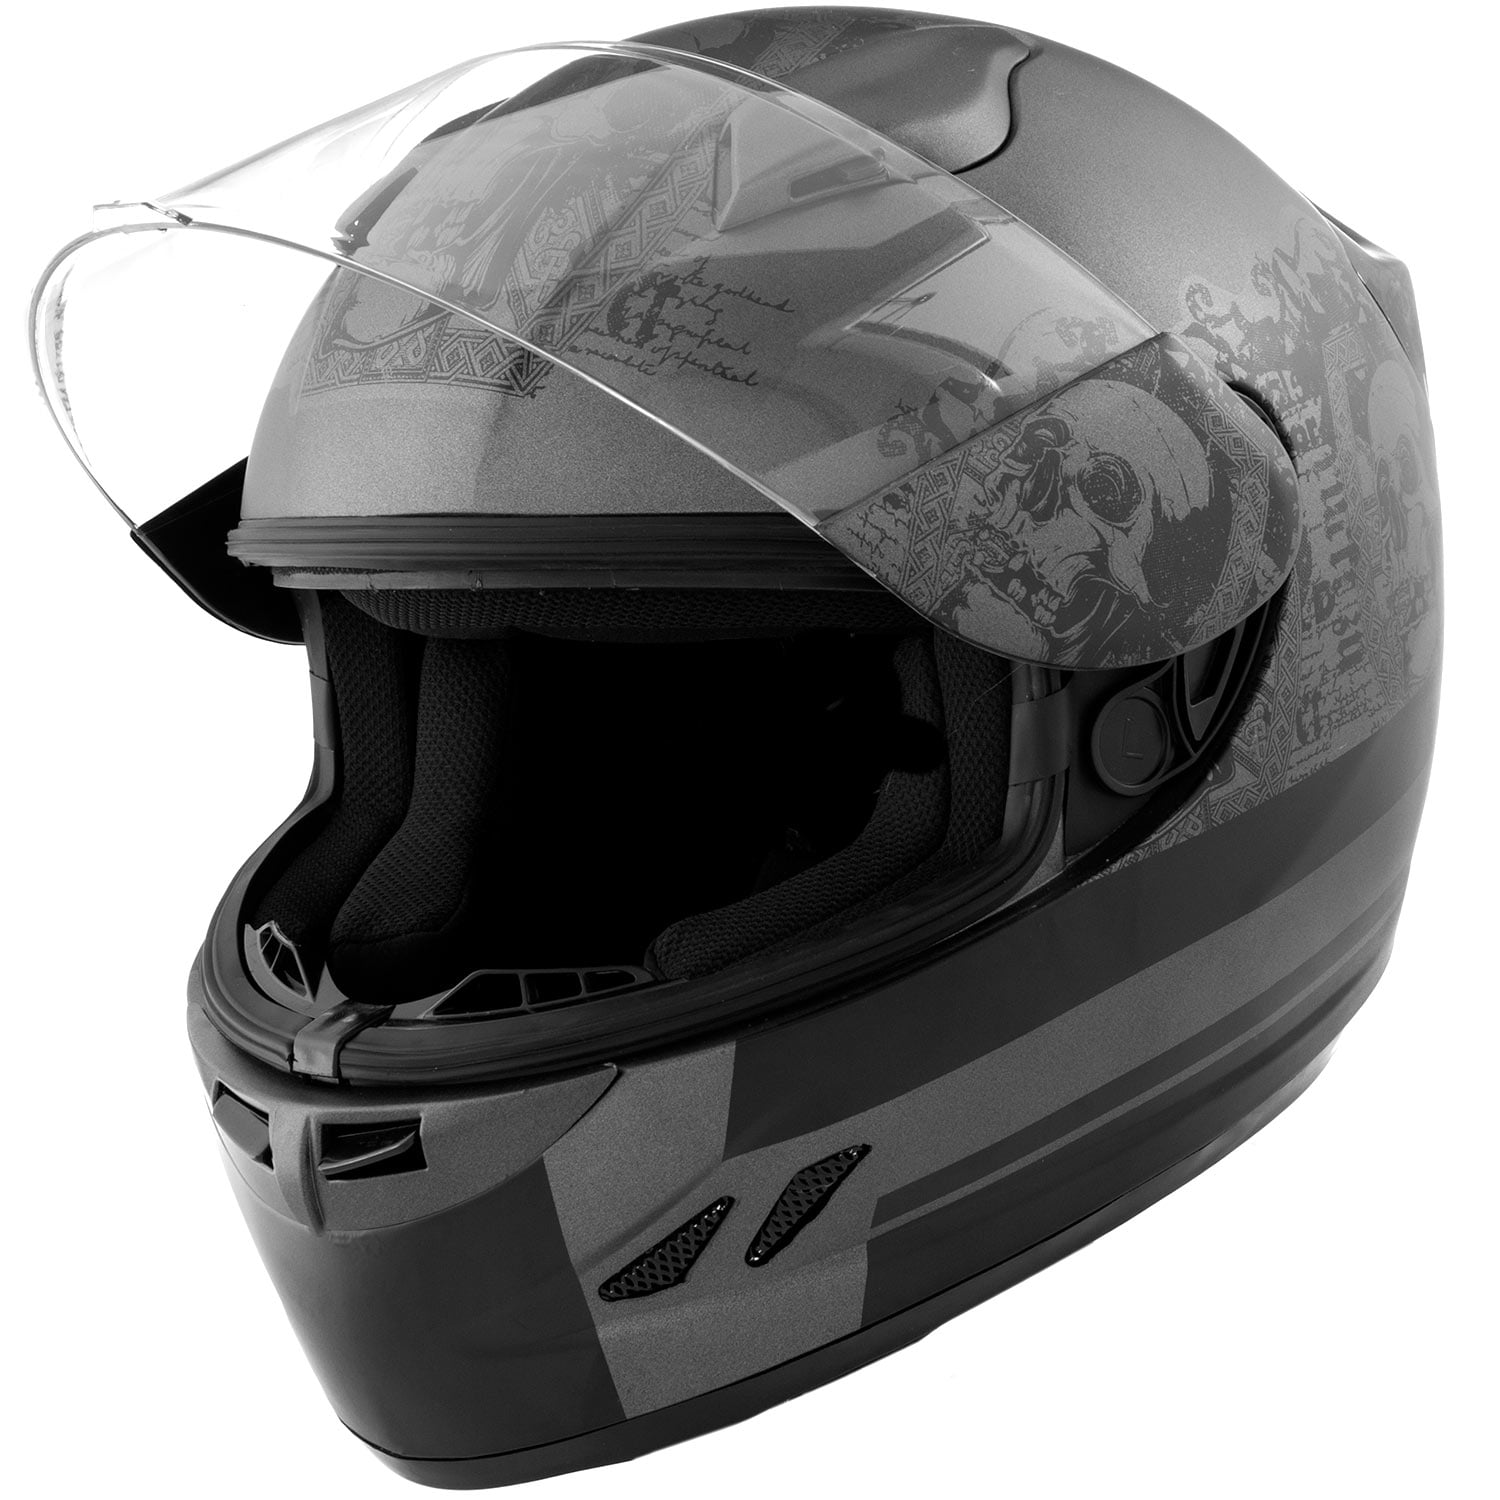 DOT Motorcycle Helmet Full Face KOI Skull Matte Grey w/ Clear Visor - Medium | Walmart Canada